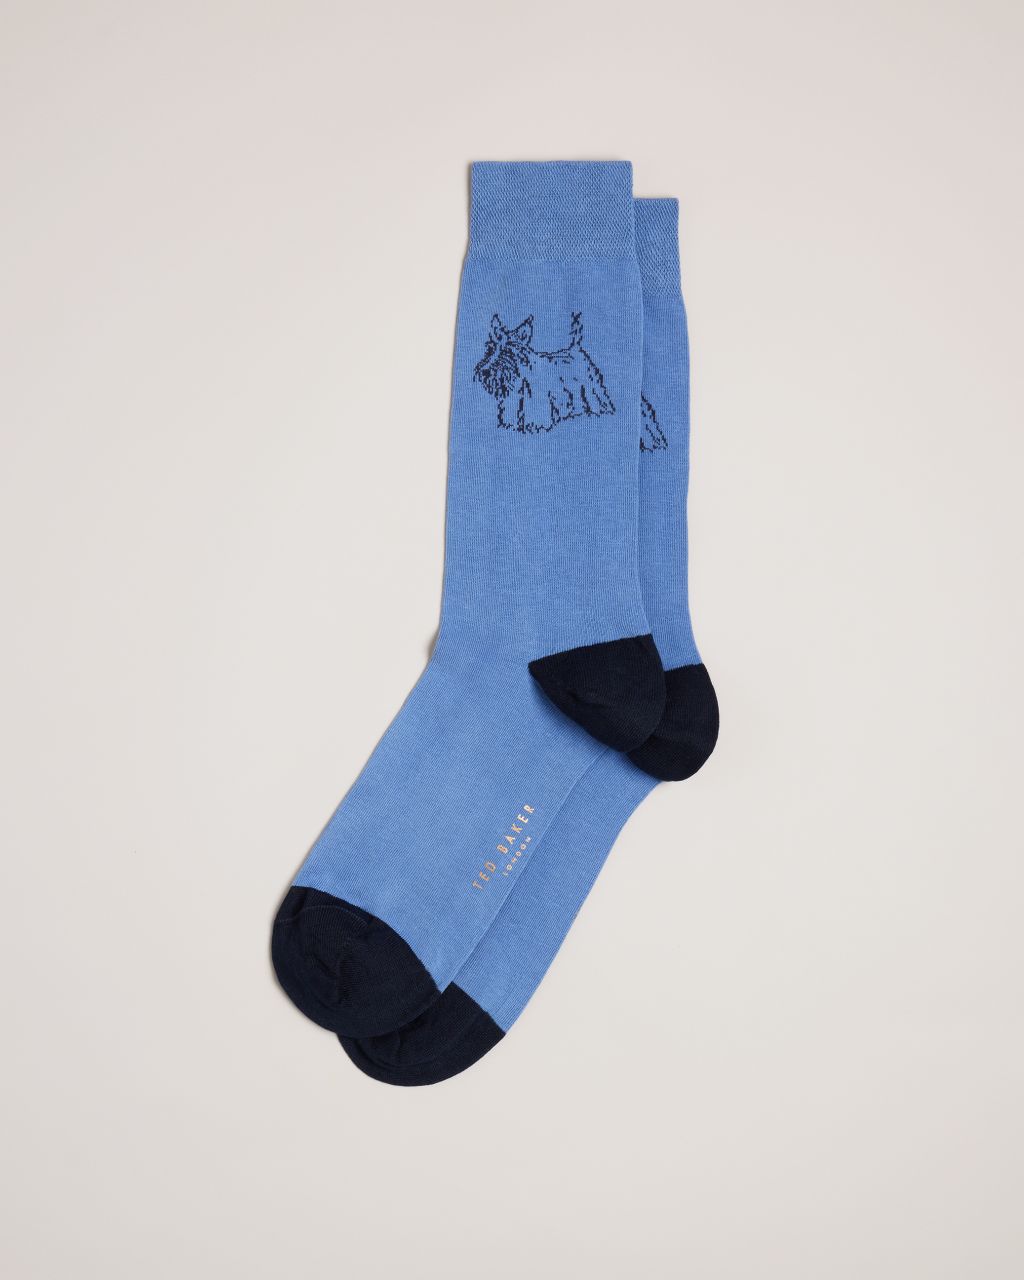 Men's Scottie Dog Print Socks in Blue, Dogsock, Cotton product